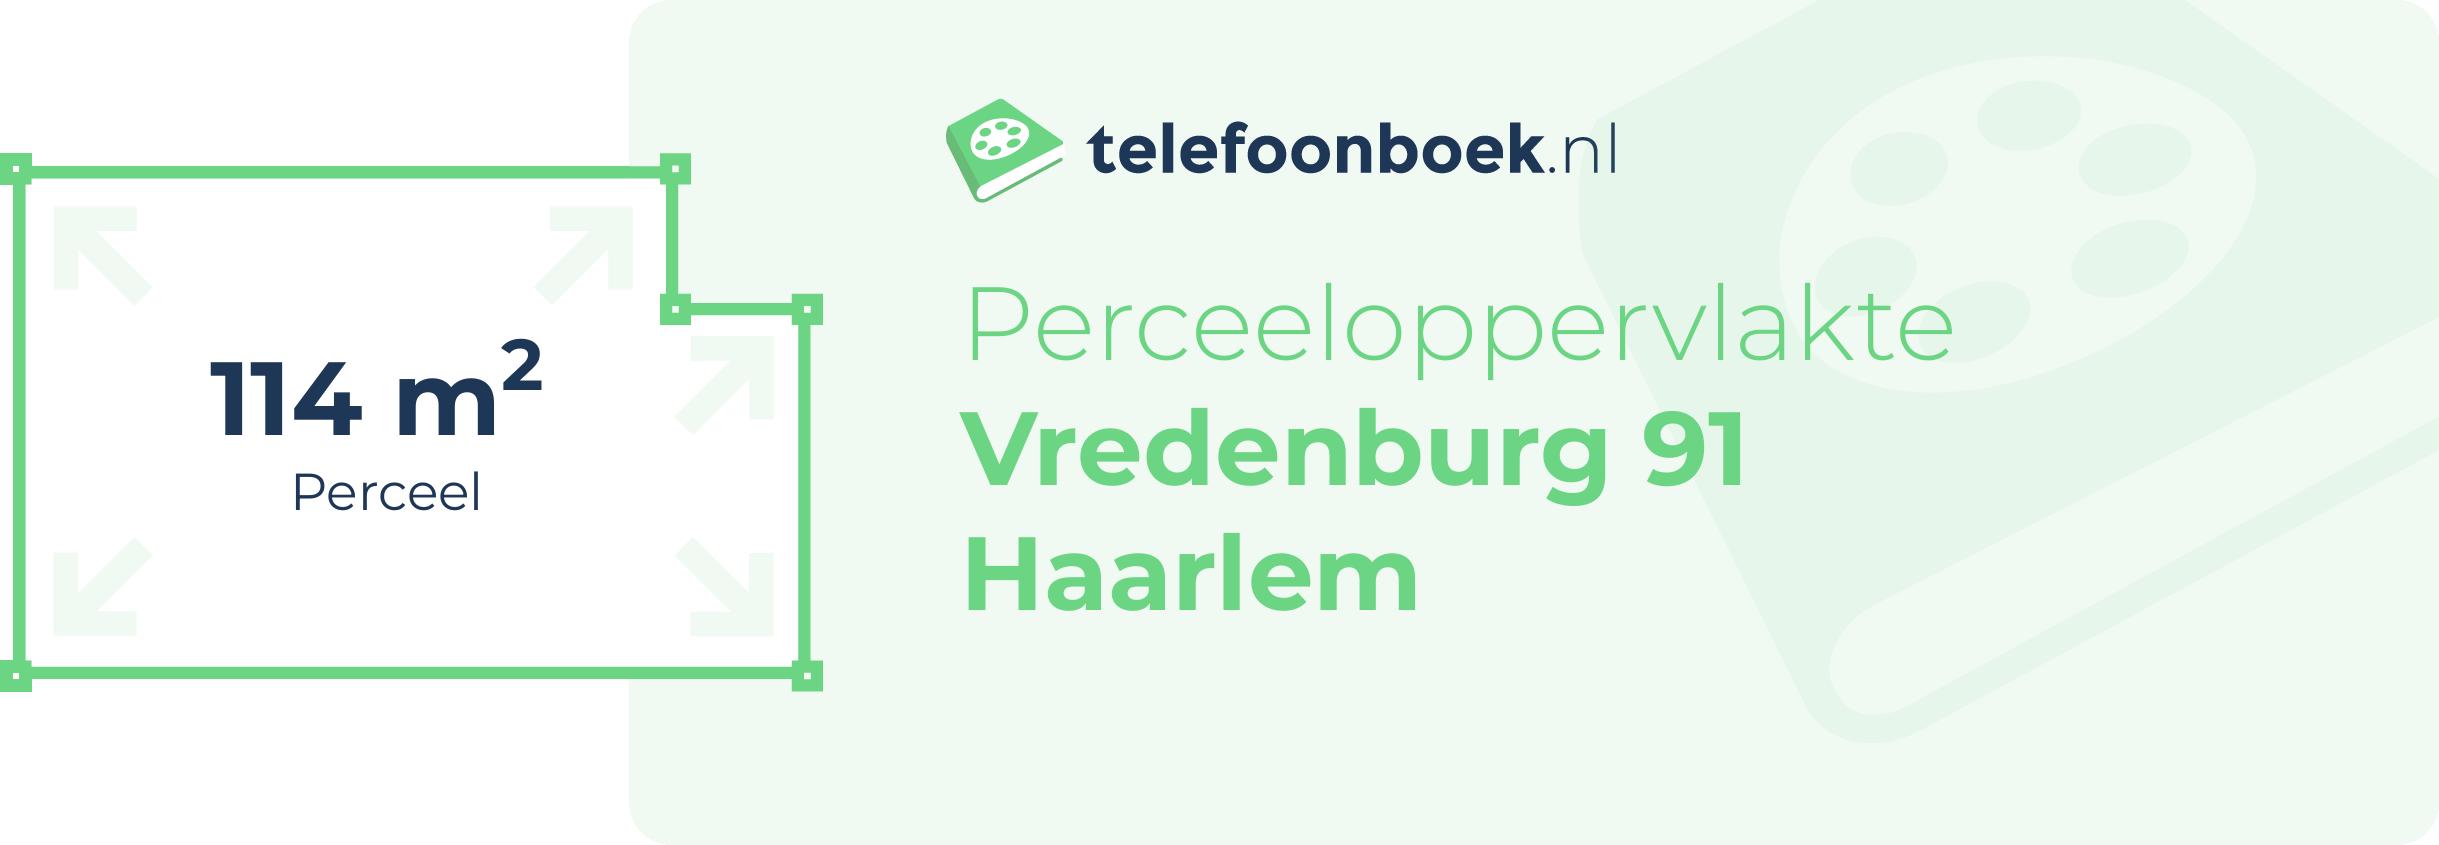 Perceeloppervlakte Vredenburg 91 Haarlem